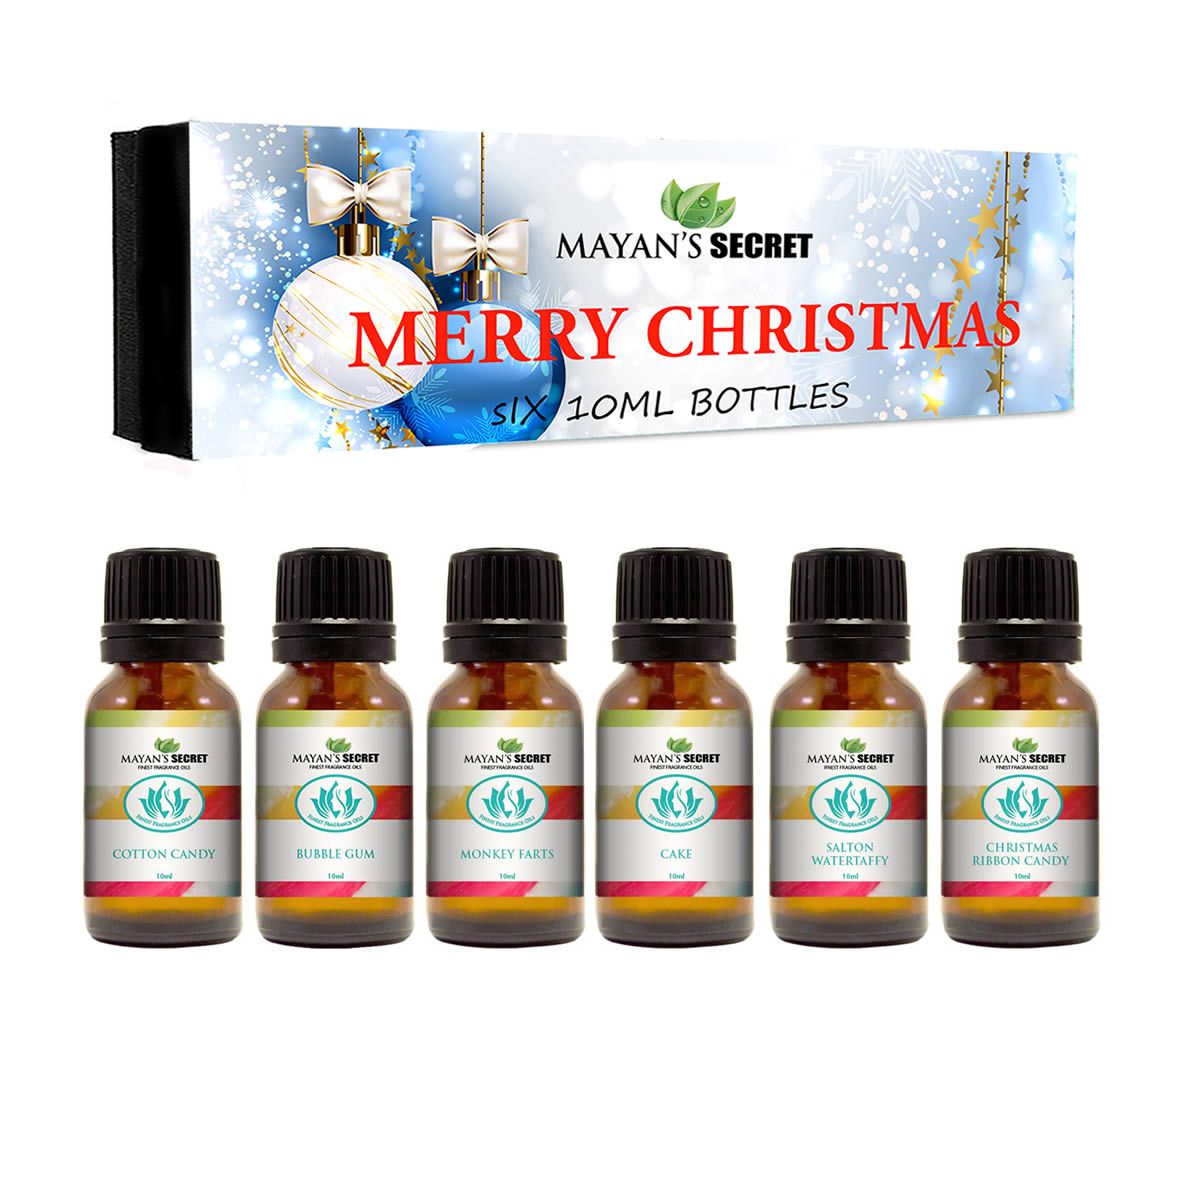 Premium Grade Fragrance Oil -Merry Christmas - Gift Set 6/10ml Cotton Candy, Bubble Gum, Monkey Farts, Cake, Salton Water Taffy, Christmas Ribbon